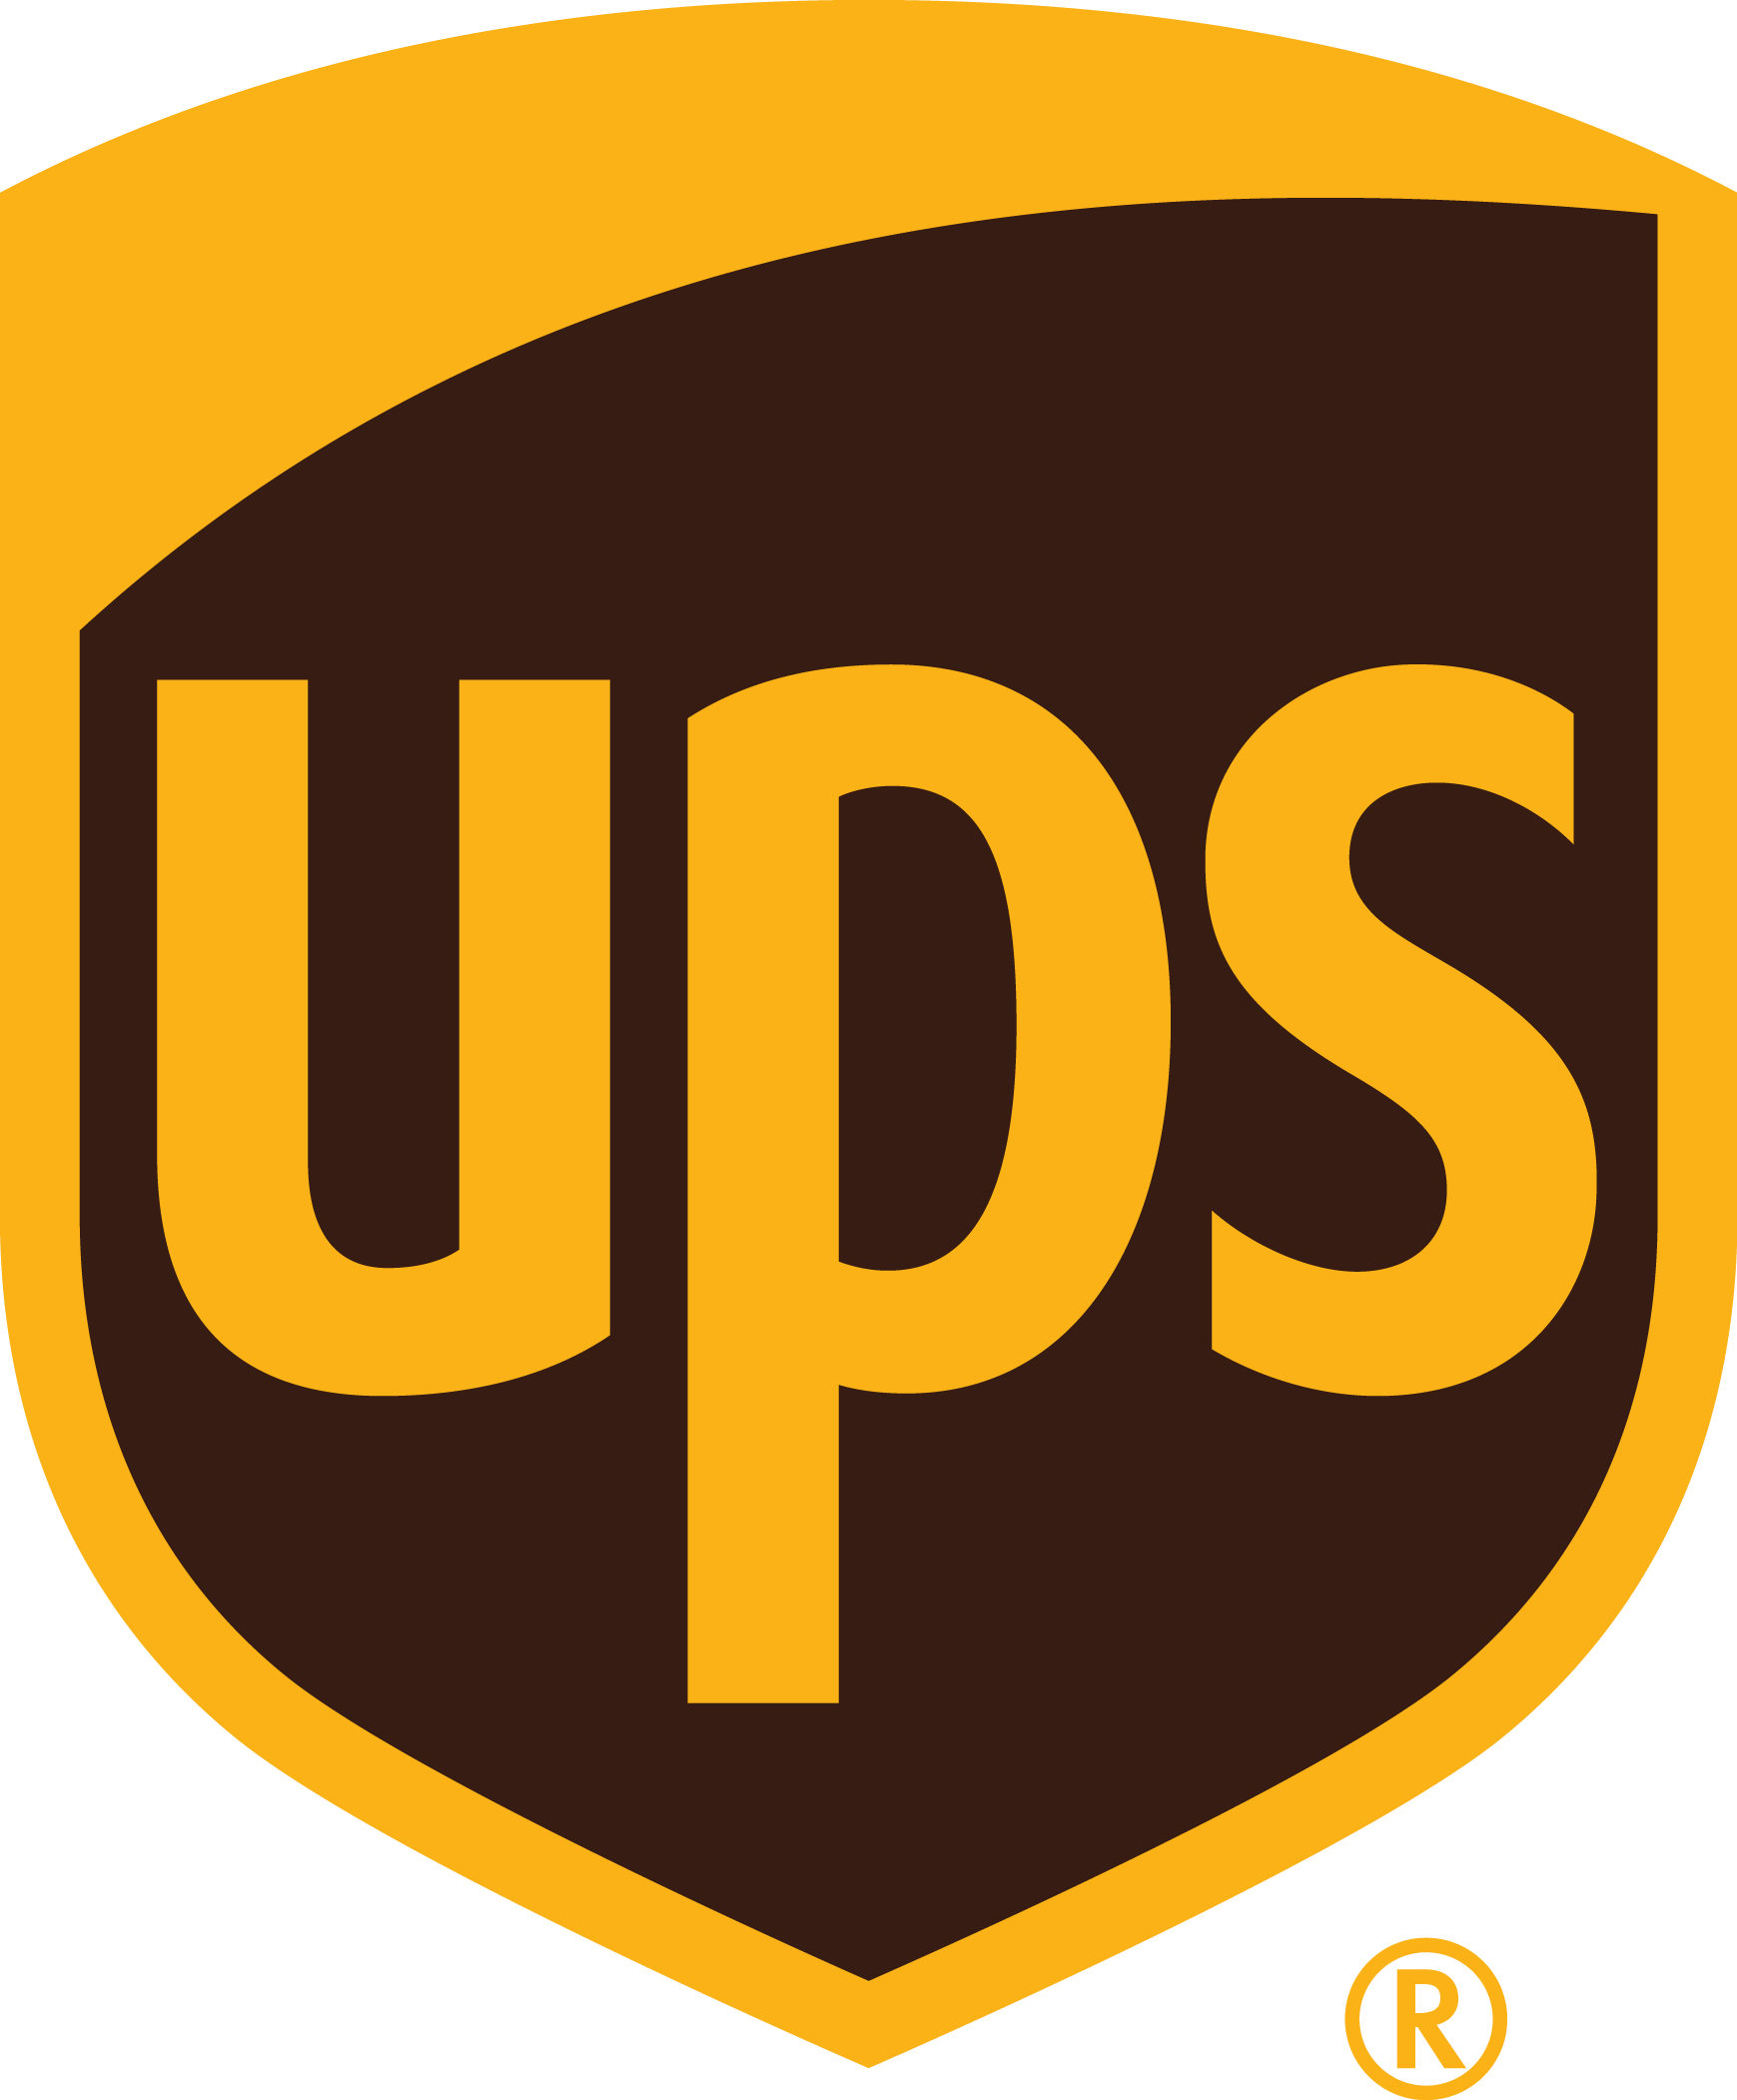 Ups_Logo - United Parcel Service, Transparent background PNG HD thumbnail